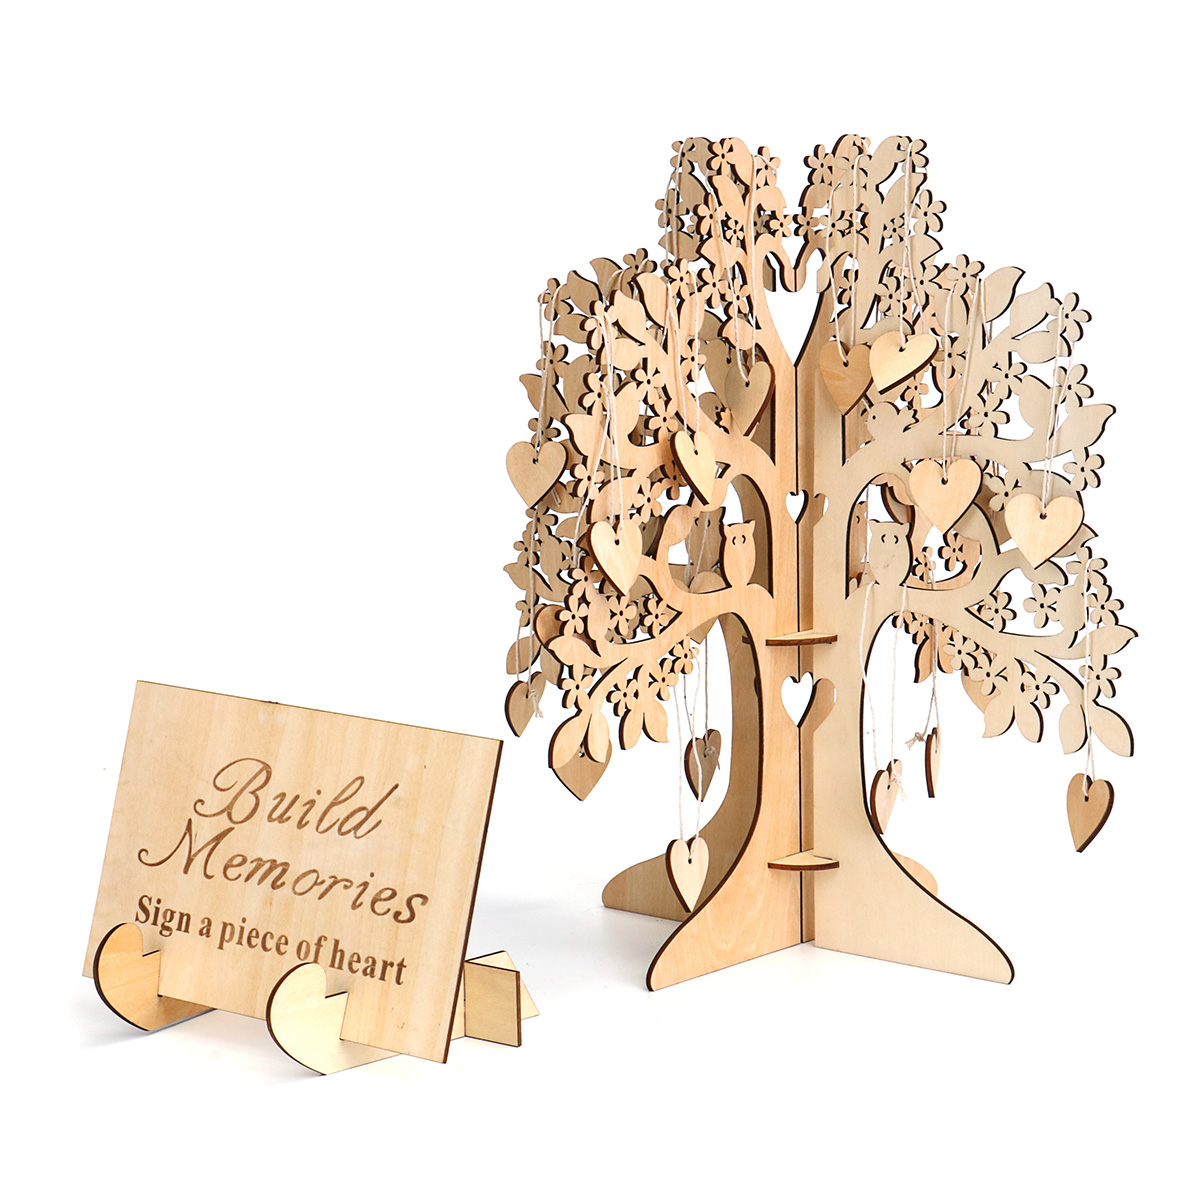 

DIY Wedding Book Tree Marriage Guest Book Wooden Tree Hearts Pendant Drop Ornaments Decorations